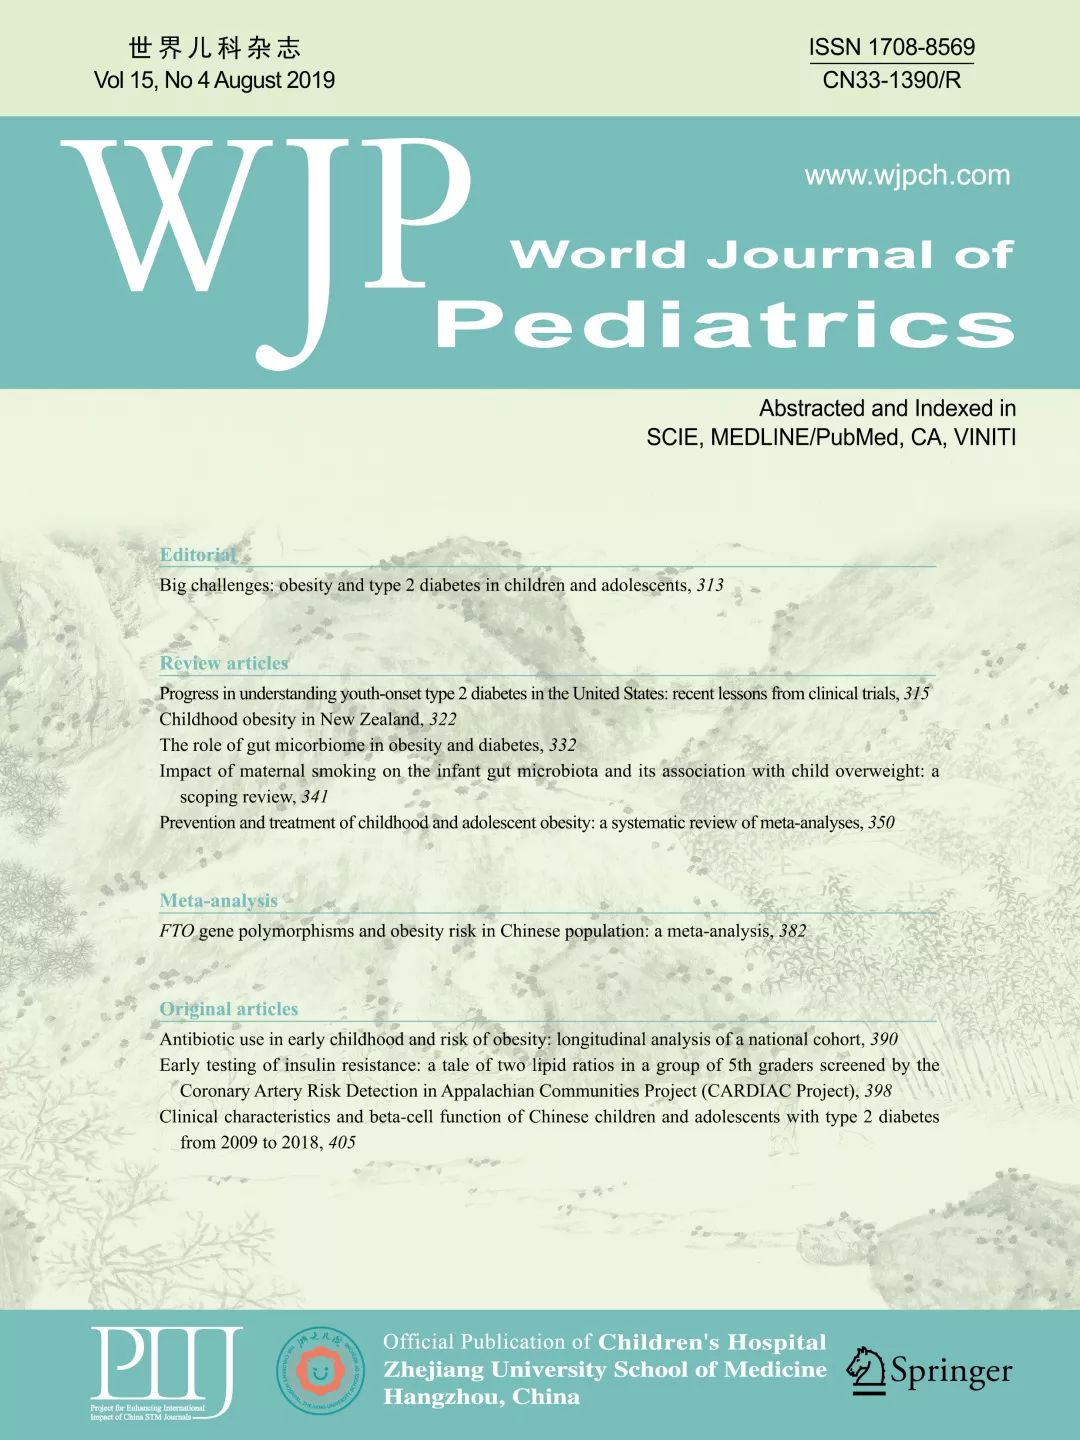 world journal of pediatrics成功入选儿科学科技期刊